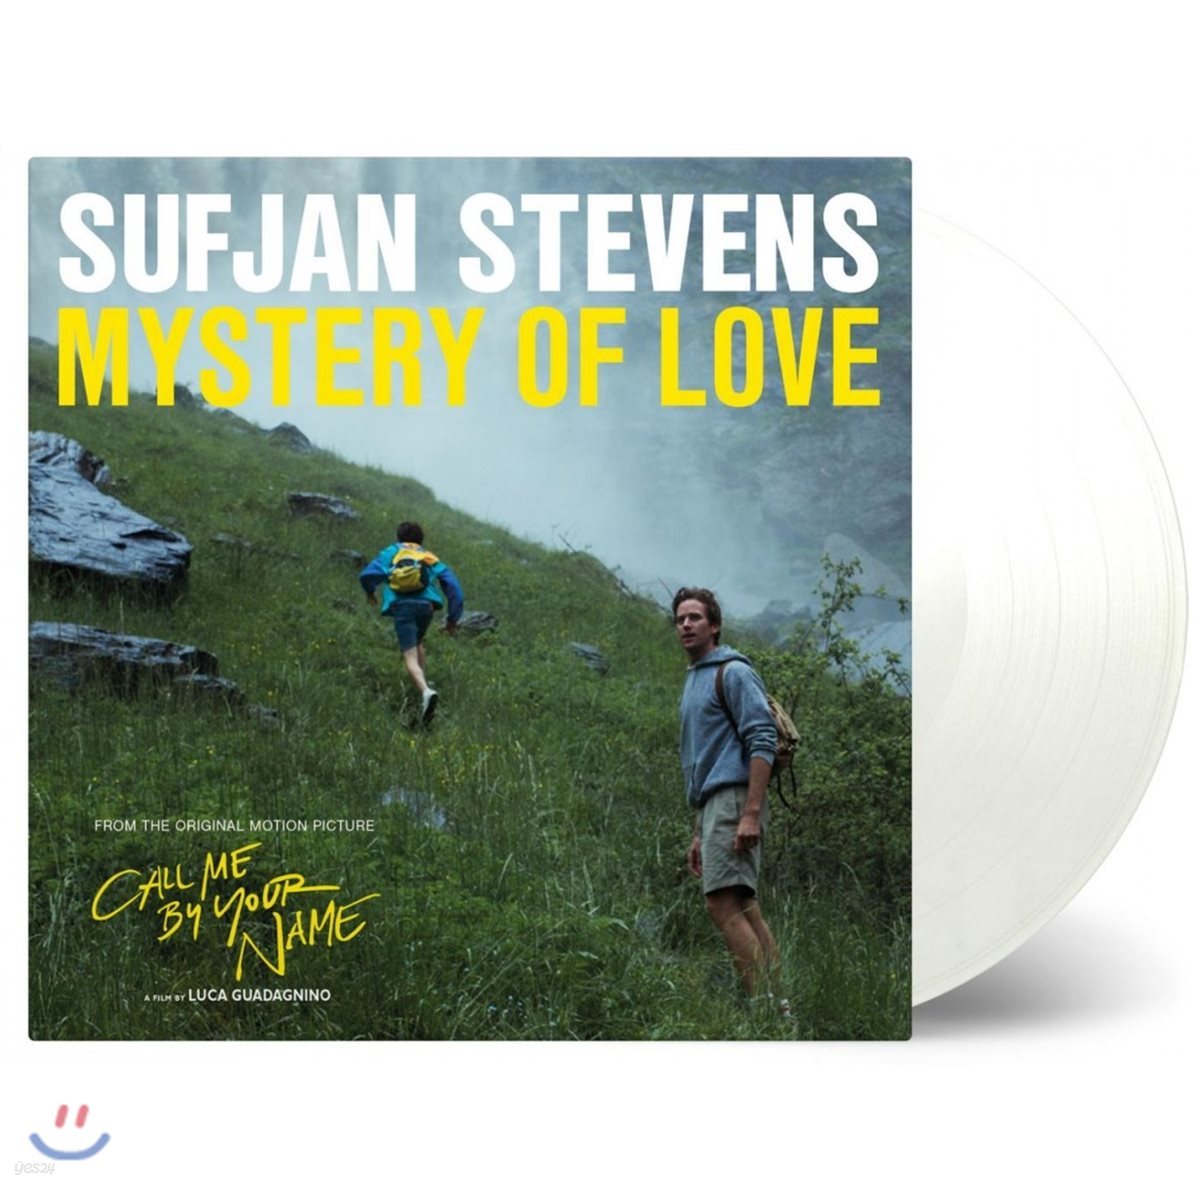 Sufjan Stevens (수프얀 스티븐스) - Mystery Of Love EP (콜 미 바이 유어 네임 OST) [투명 컬러 LP]